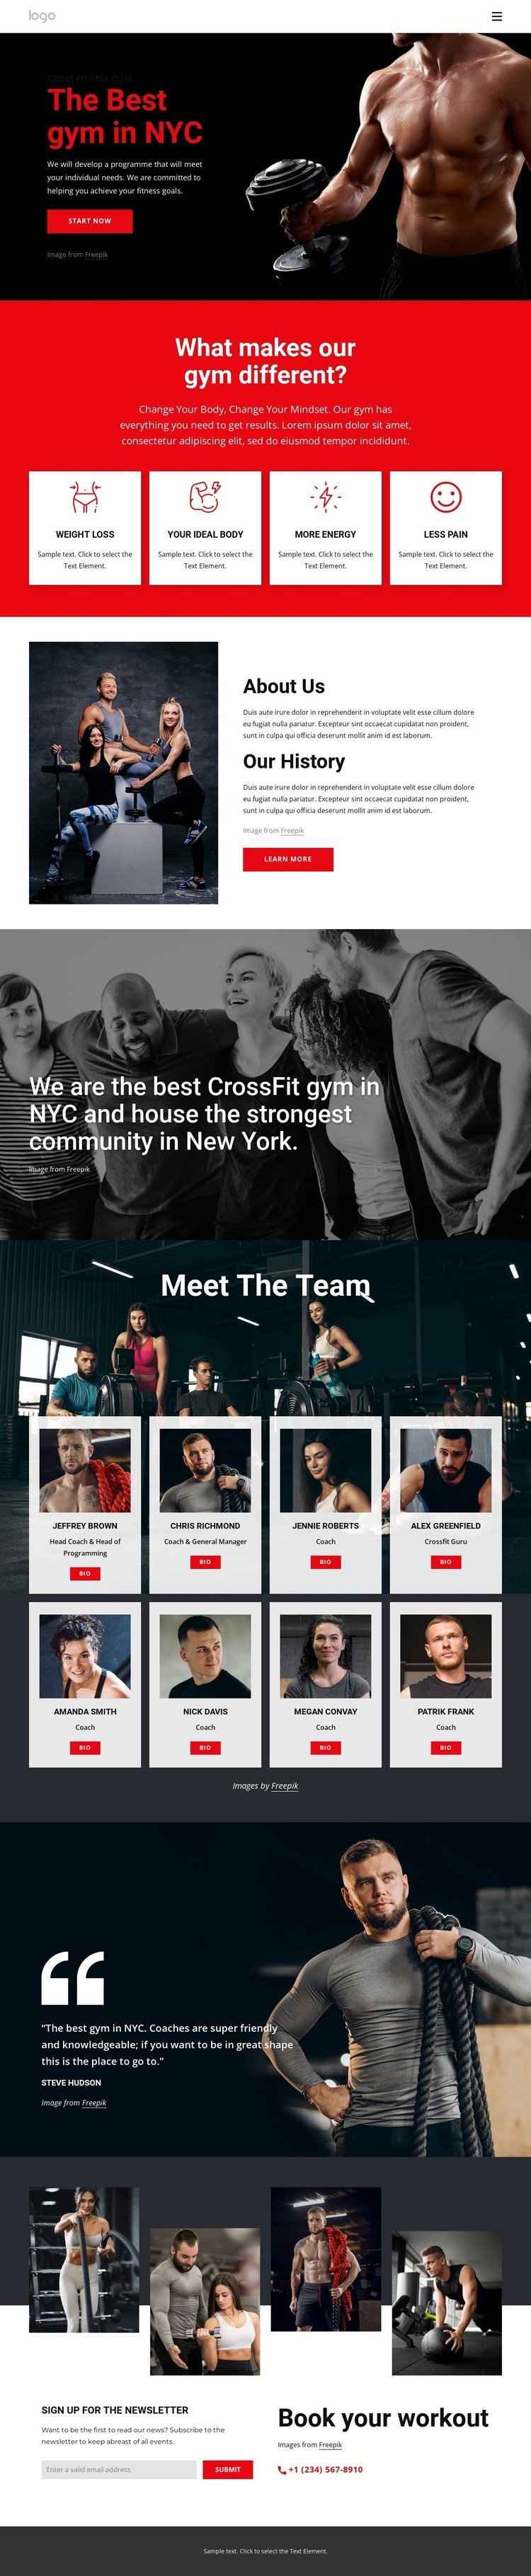 The best crossfit gym Homepage Design